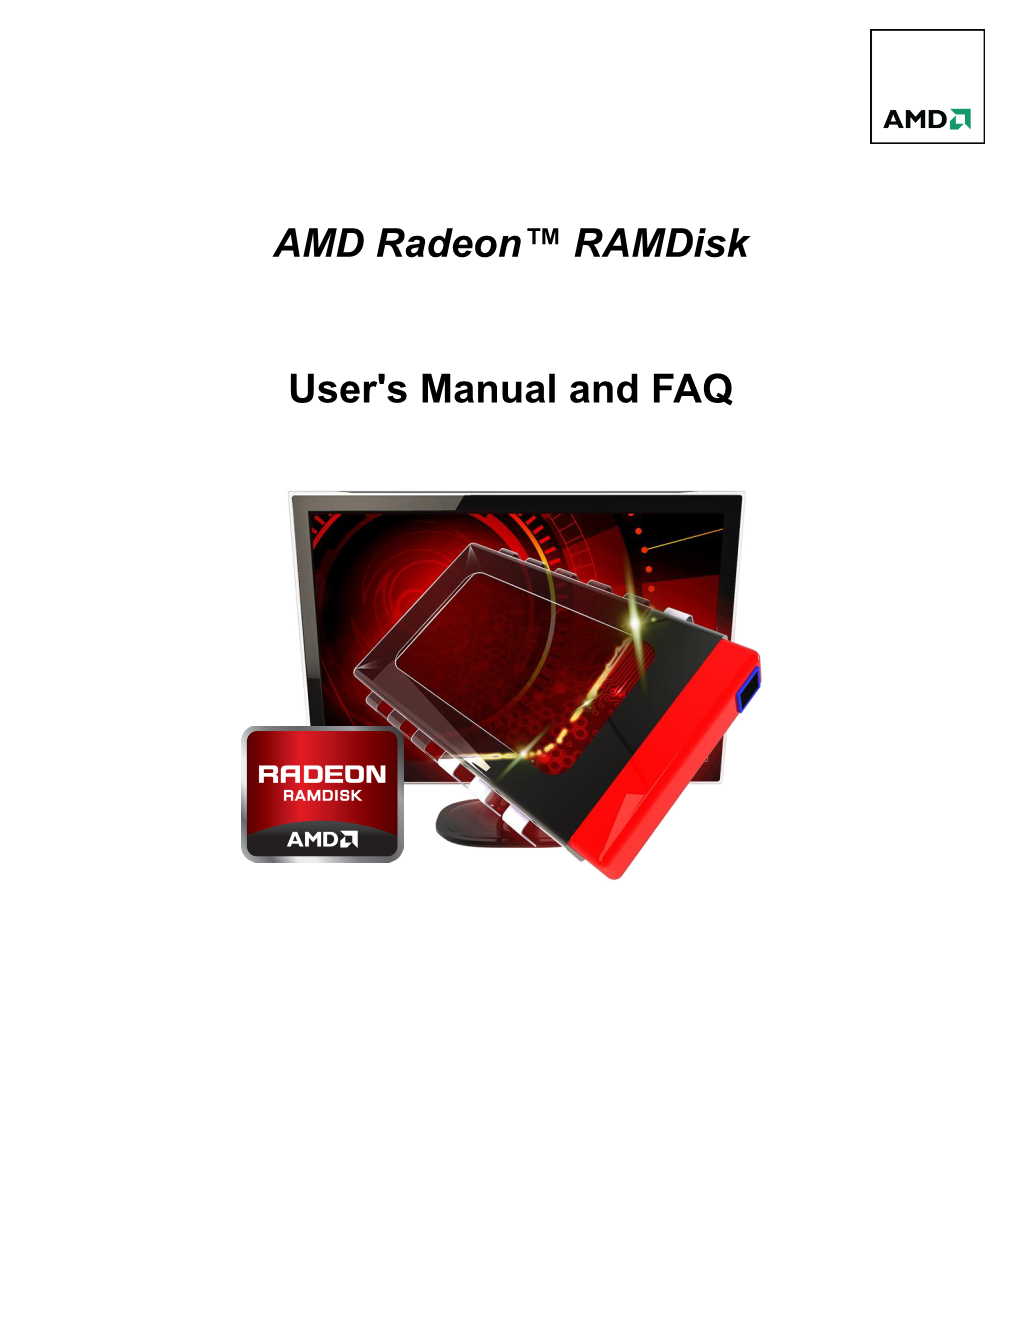 AMD Radeon™ Ramdisk User's Manual And